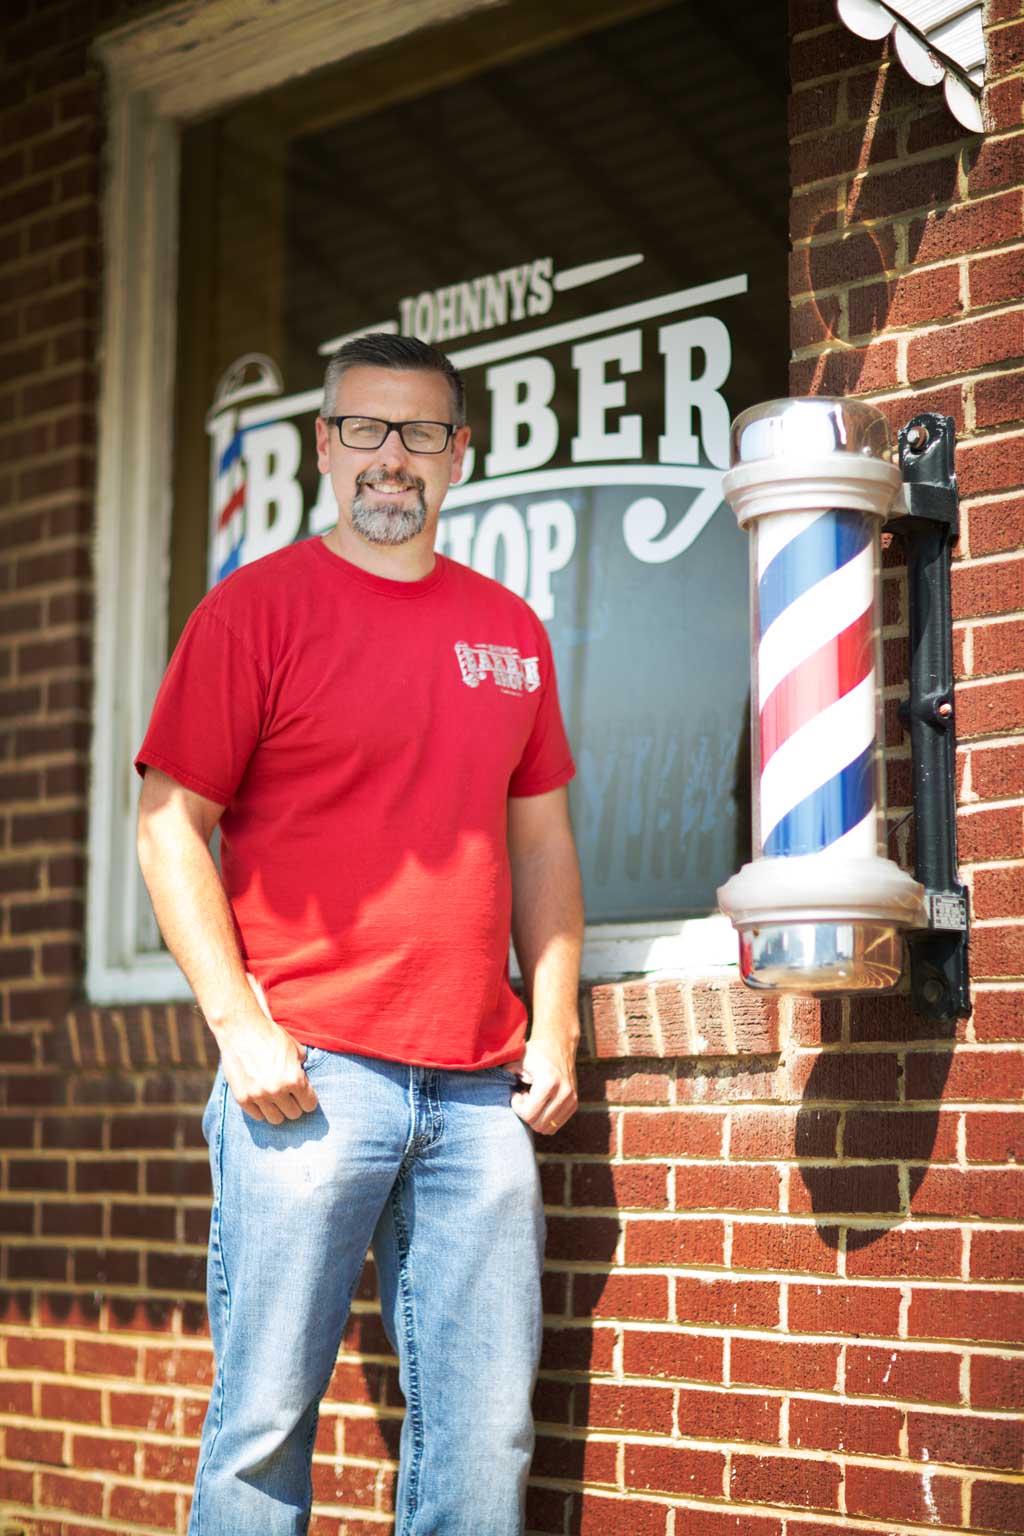 Cuttn Up Barbershop